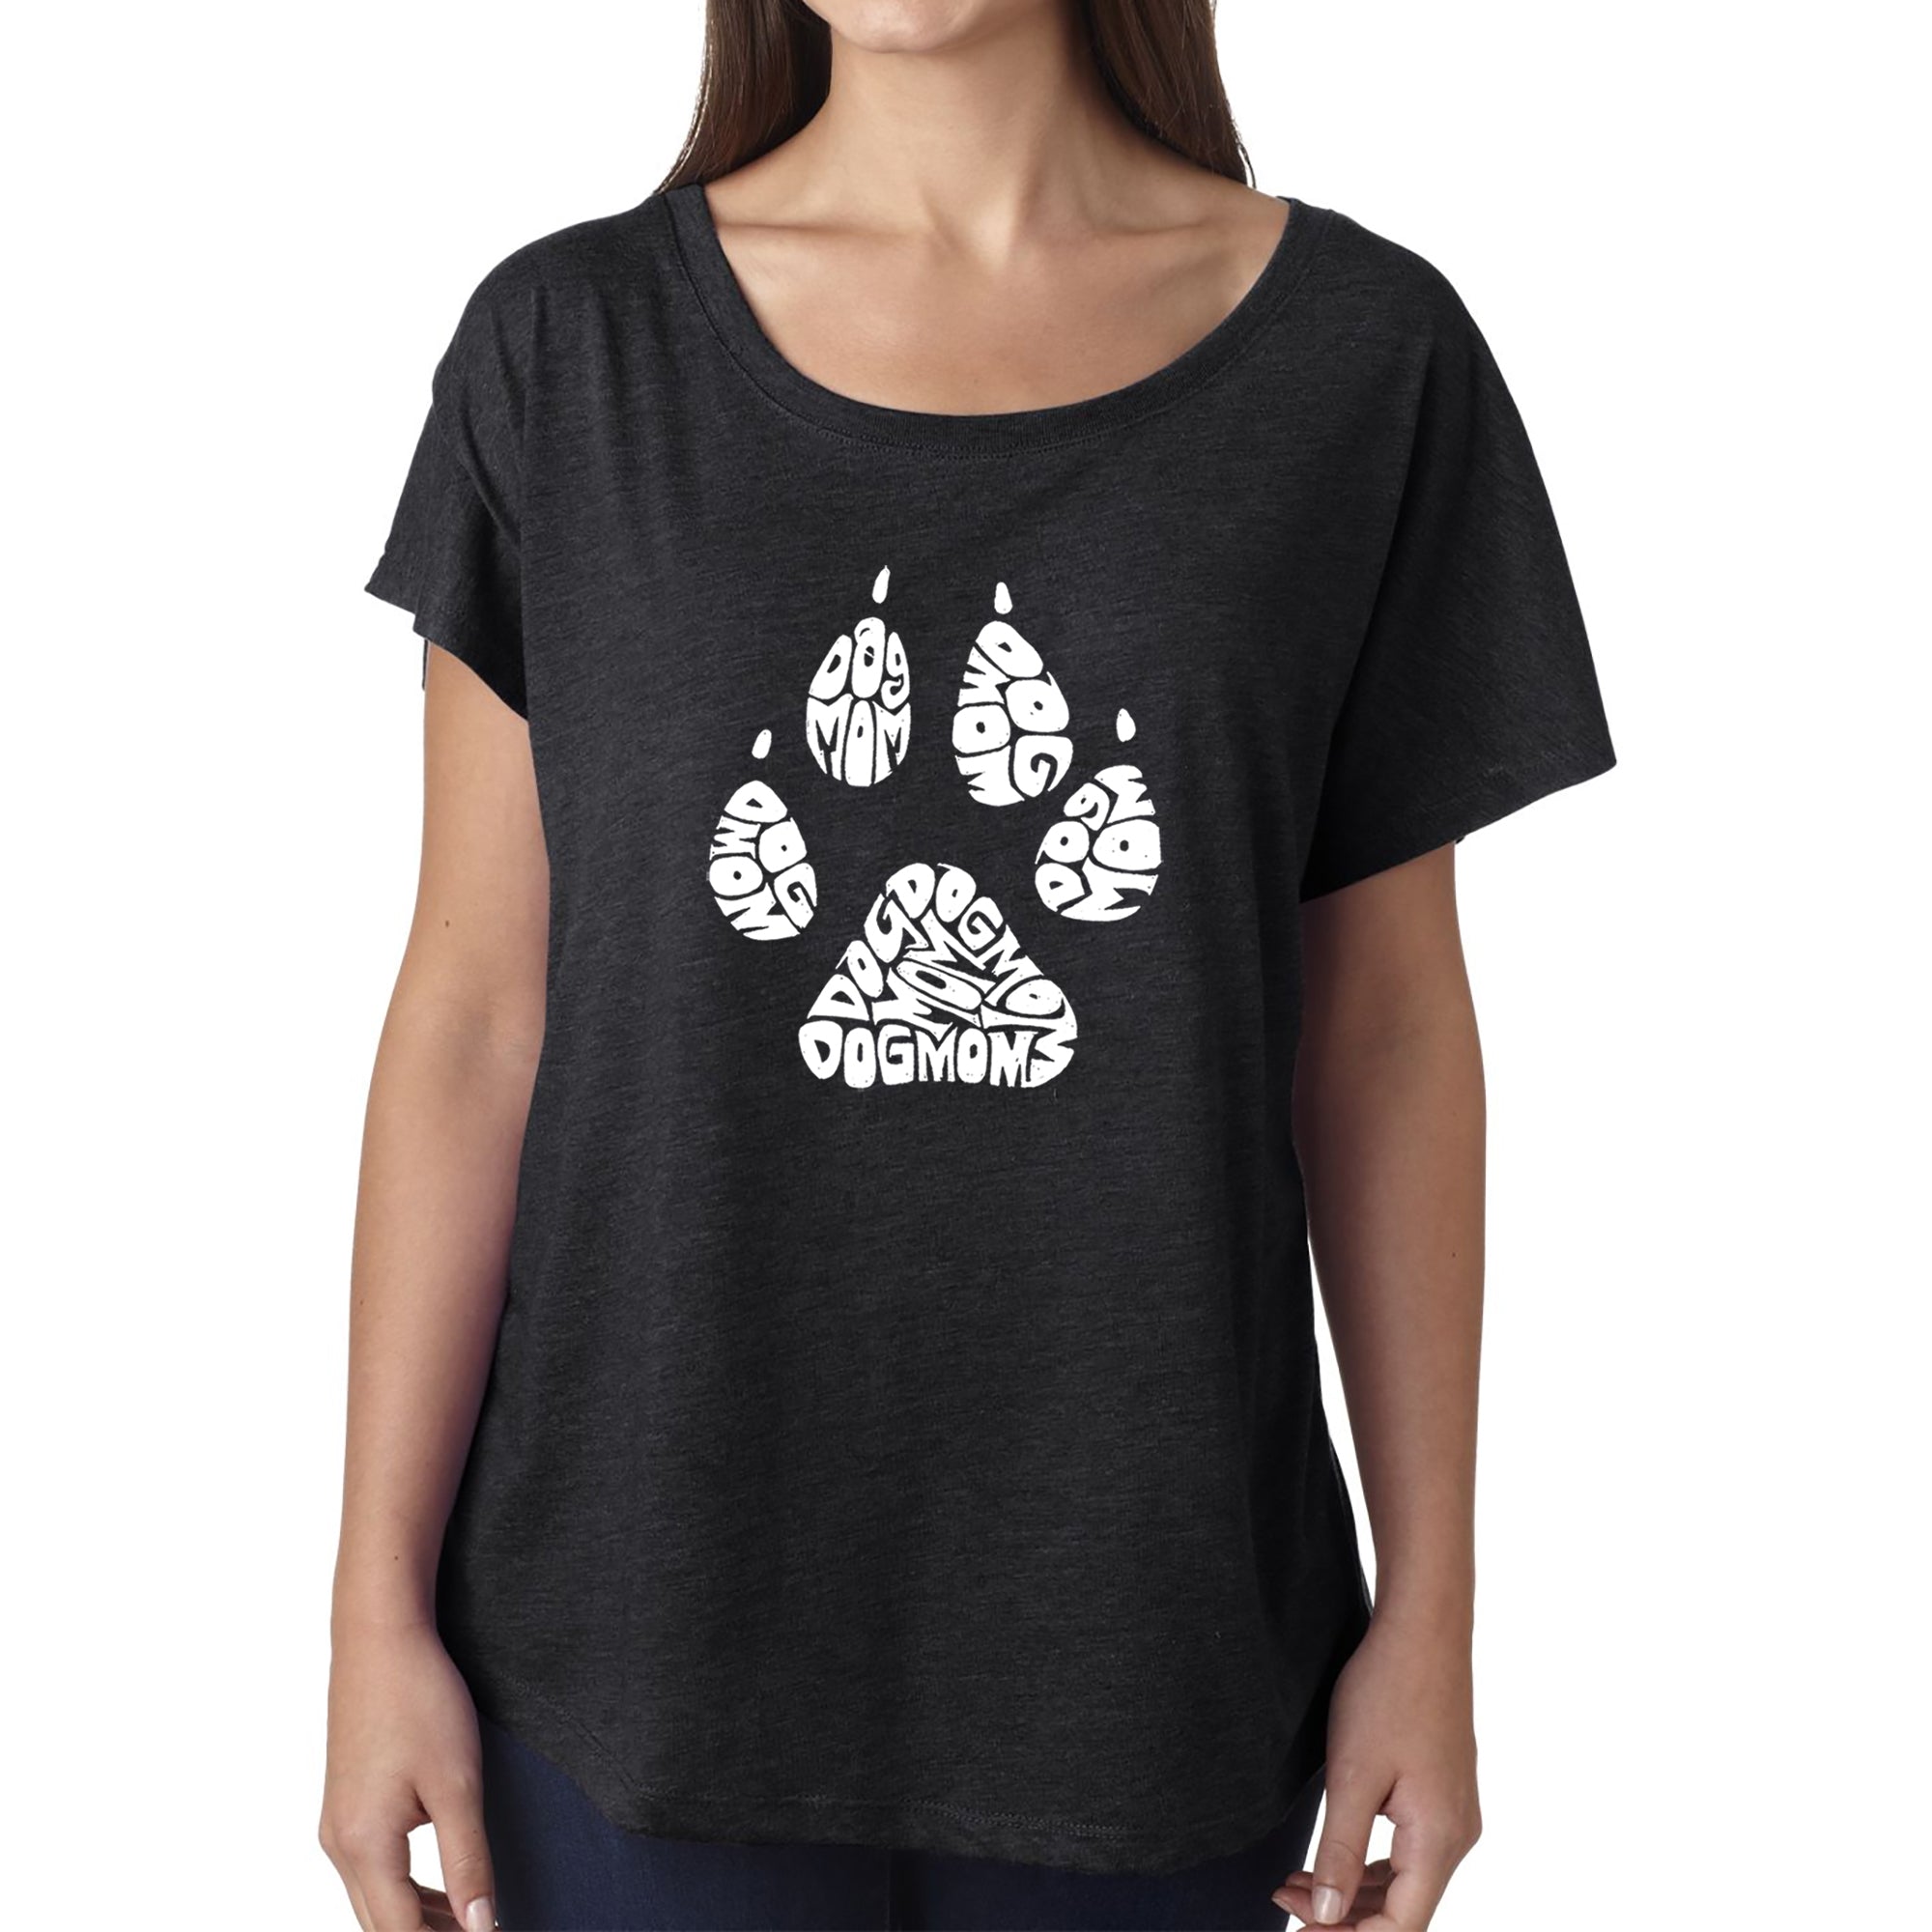 Dog Mom - Women's Loose Fit Dolman Cut Word Art Shirt - Black - XX-Large